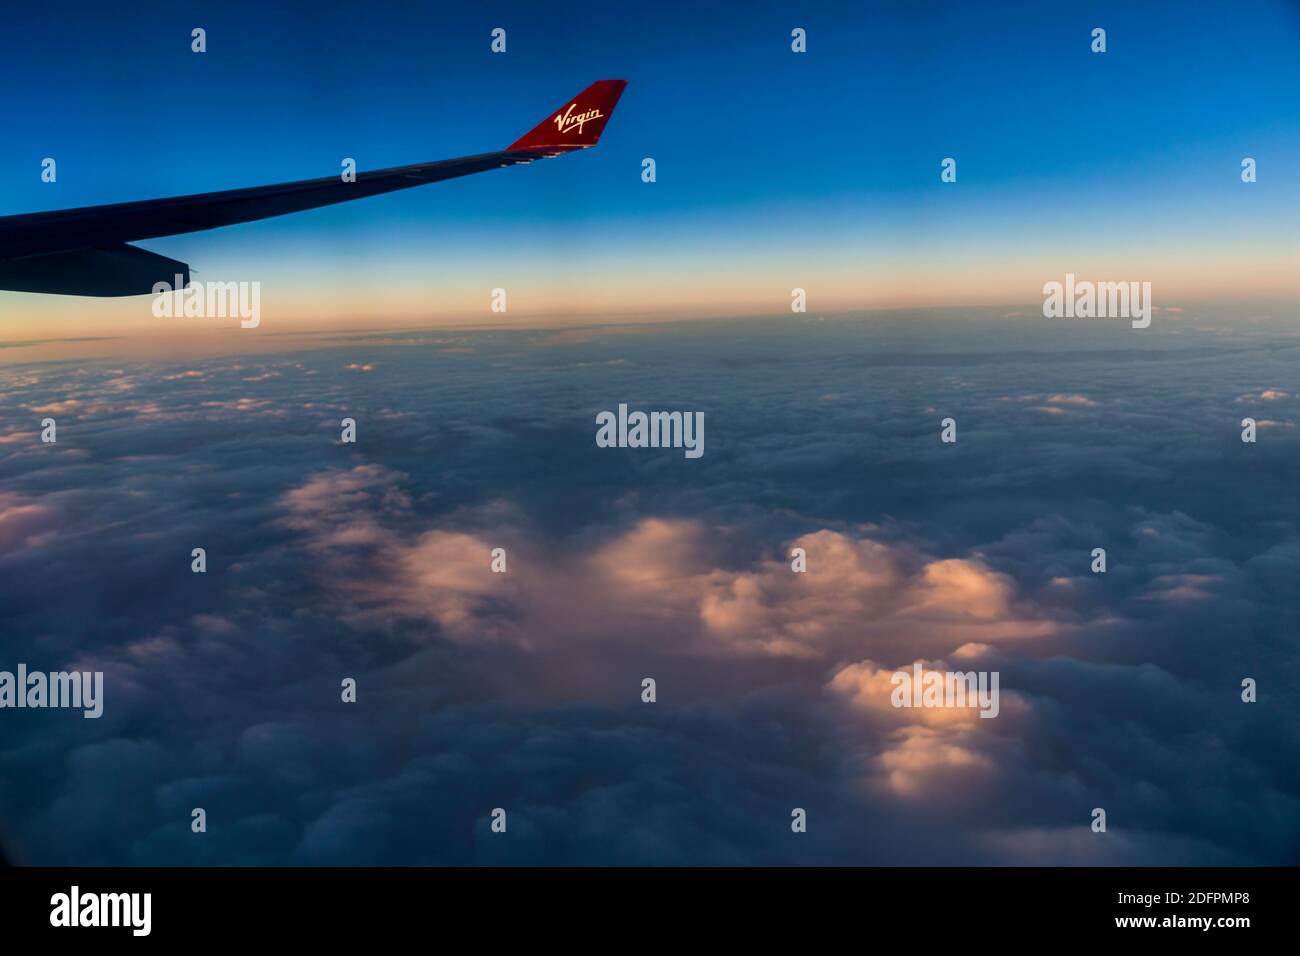 Virgin Atlantic wing tiip in flight over sunrise clouds Stock Photo